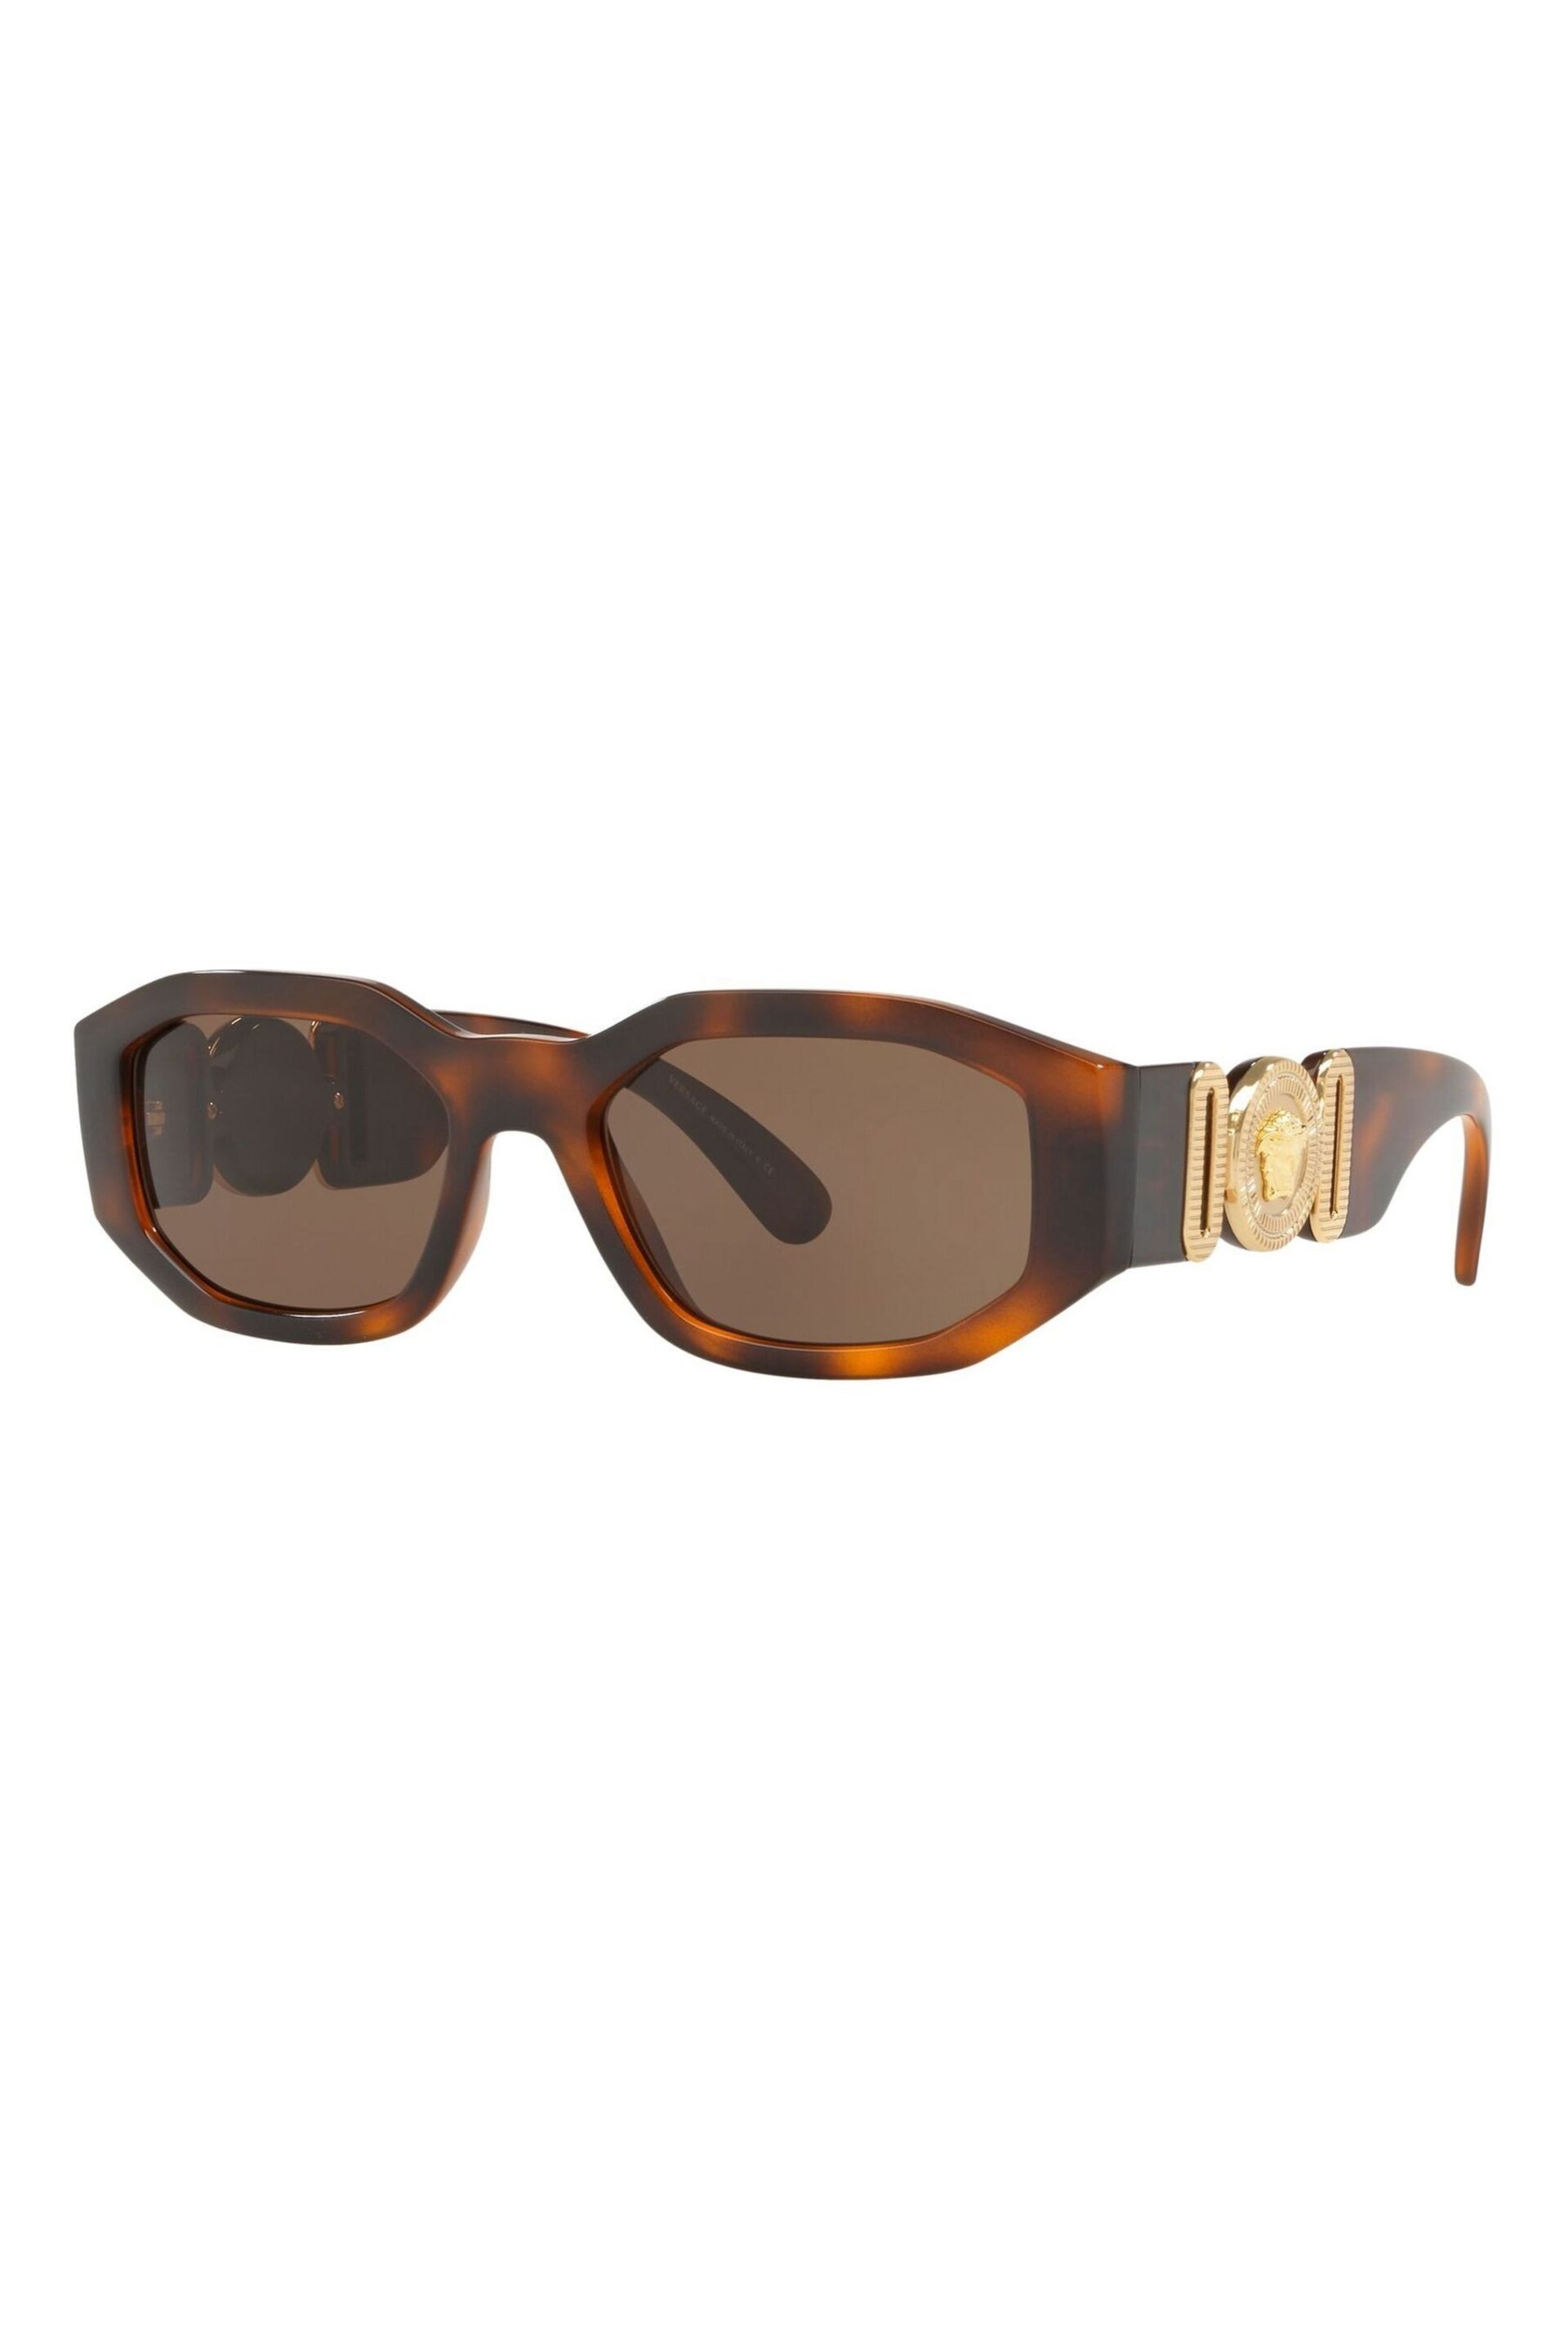 Versace Brown Medusa Biggie Sunglasses - Image 2 of 12